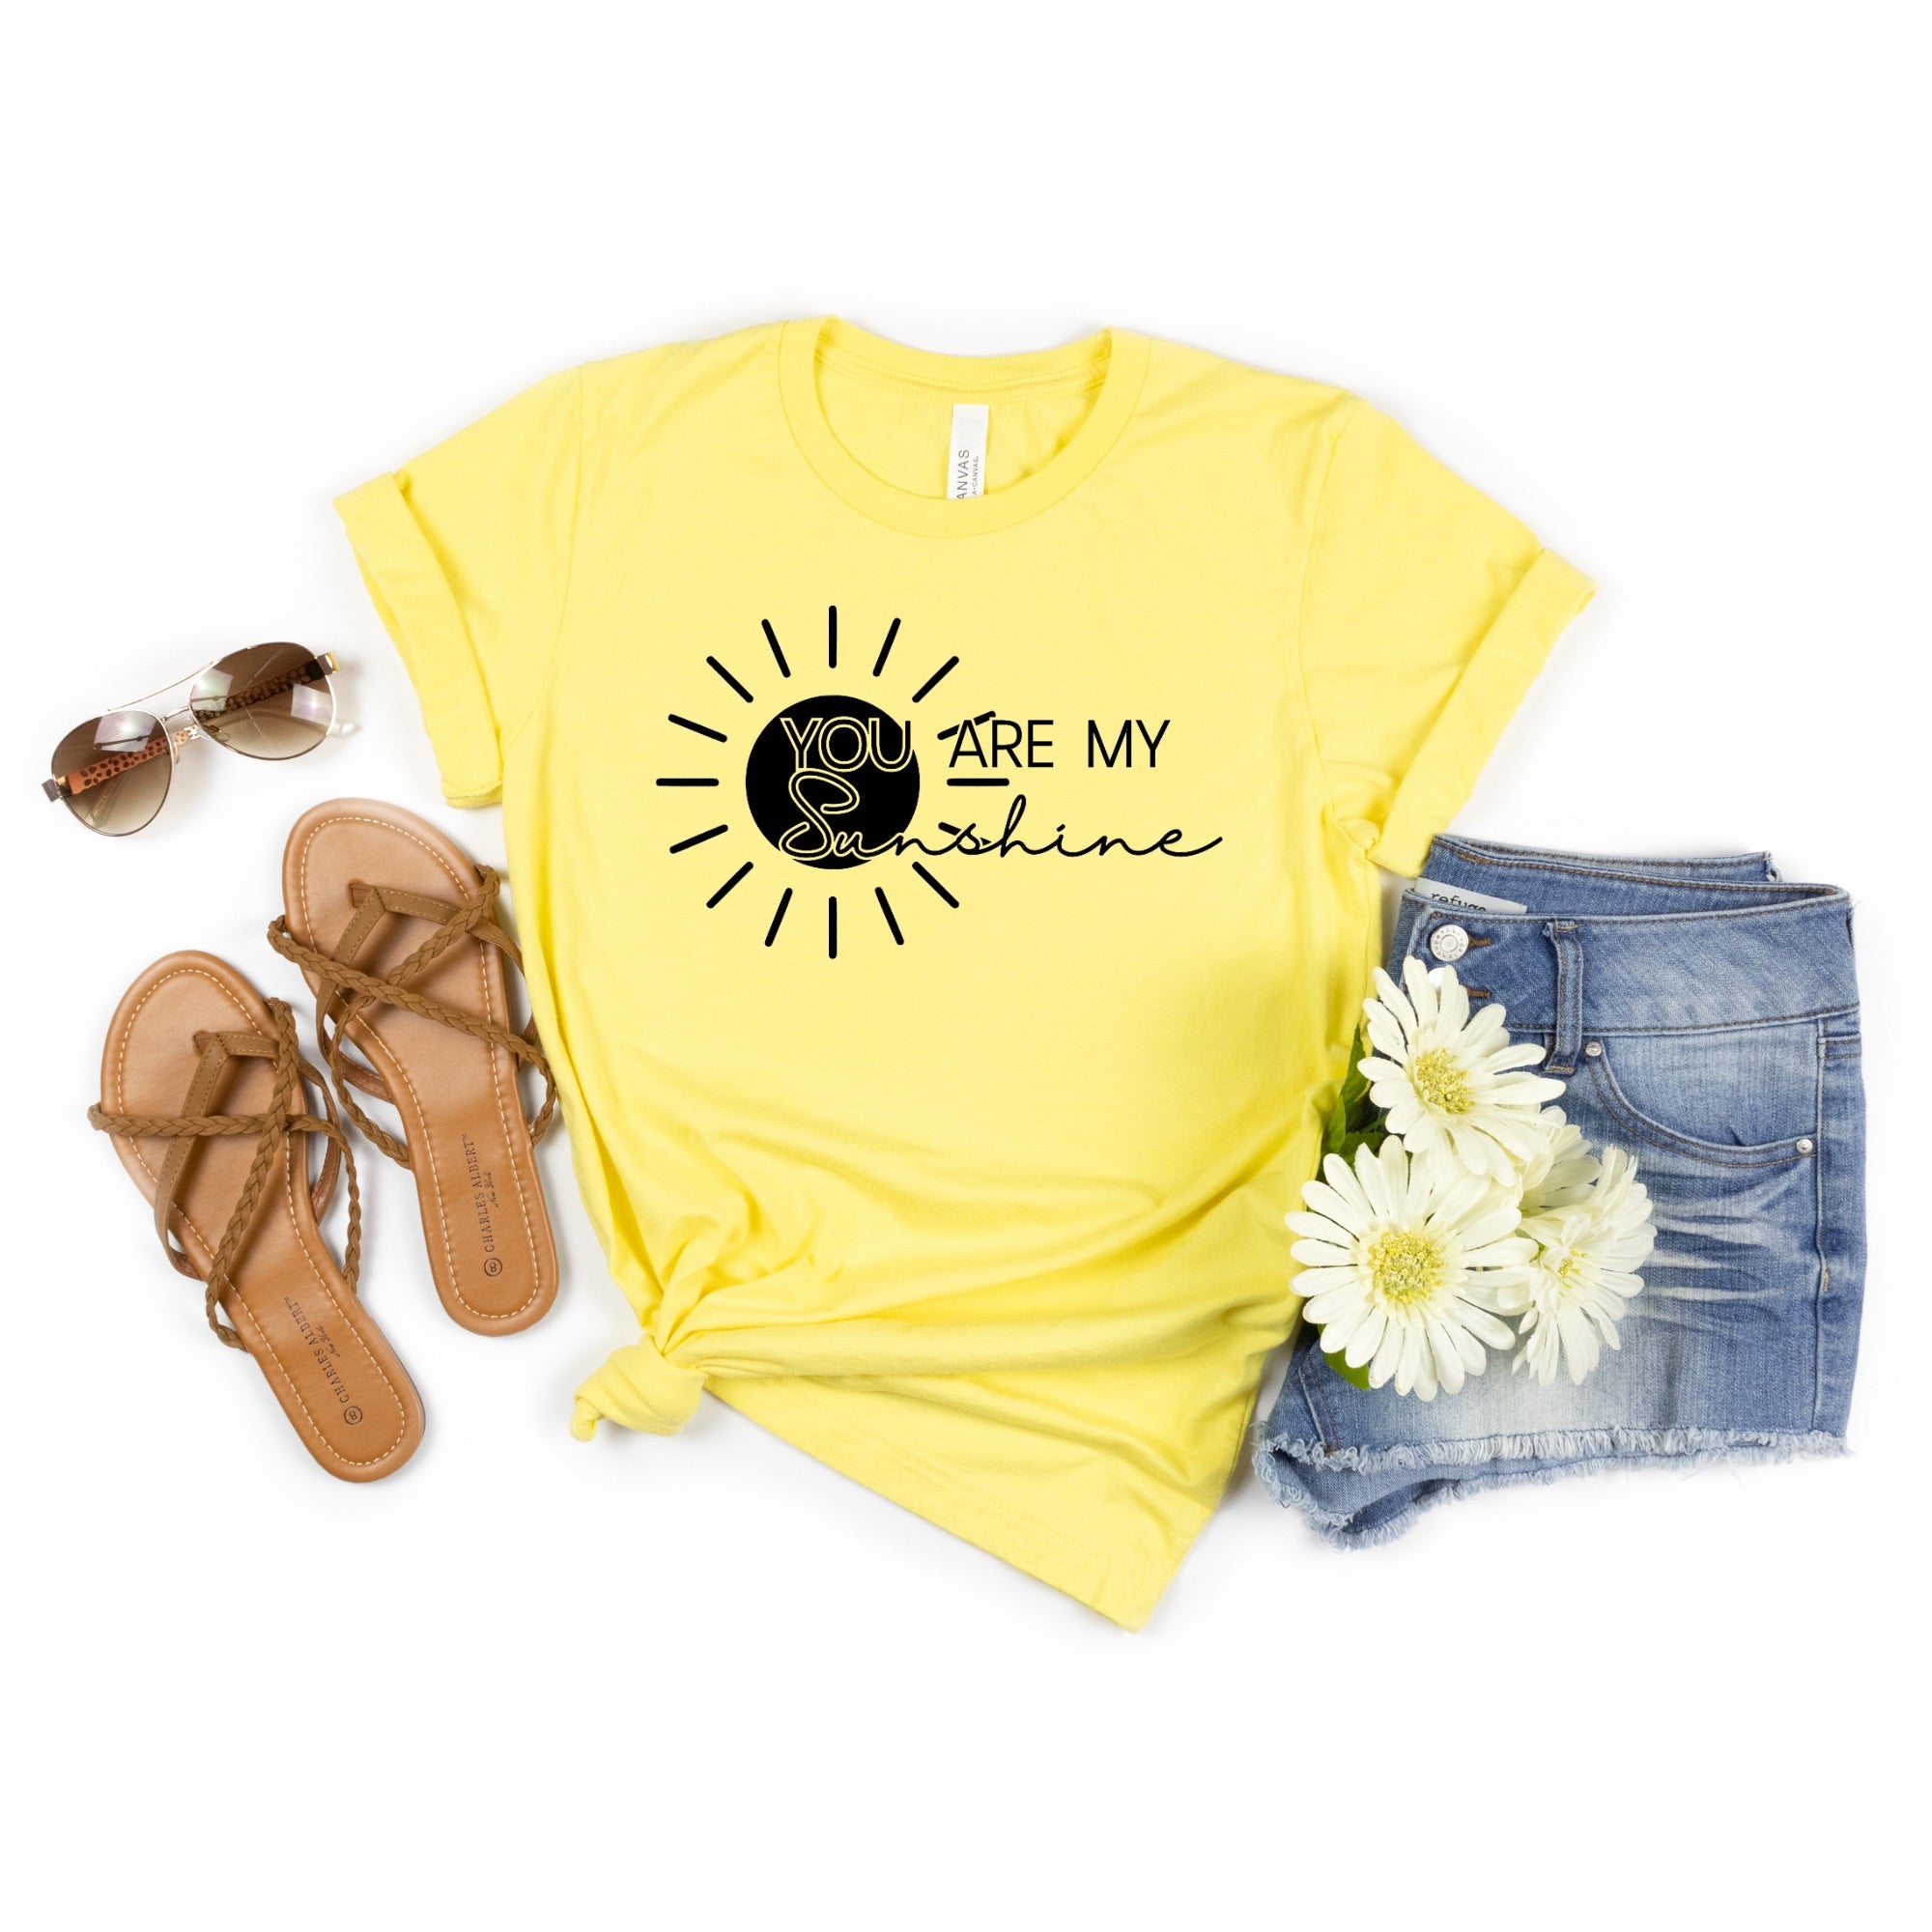 You Are My Sunshine My Only Sunshine Shirt Set